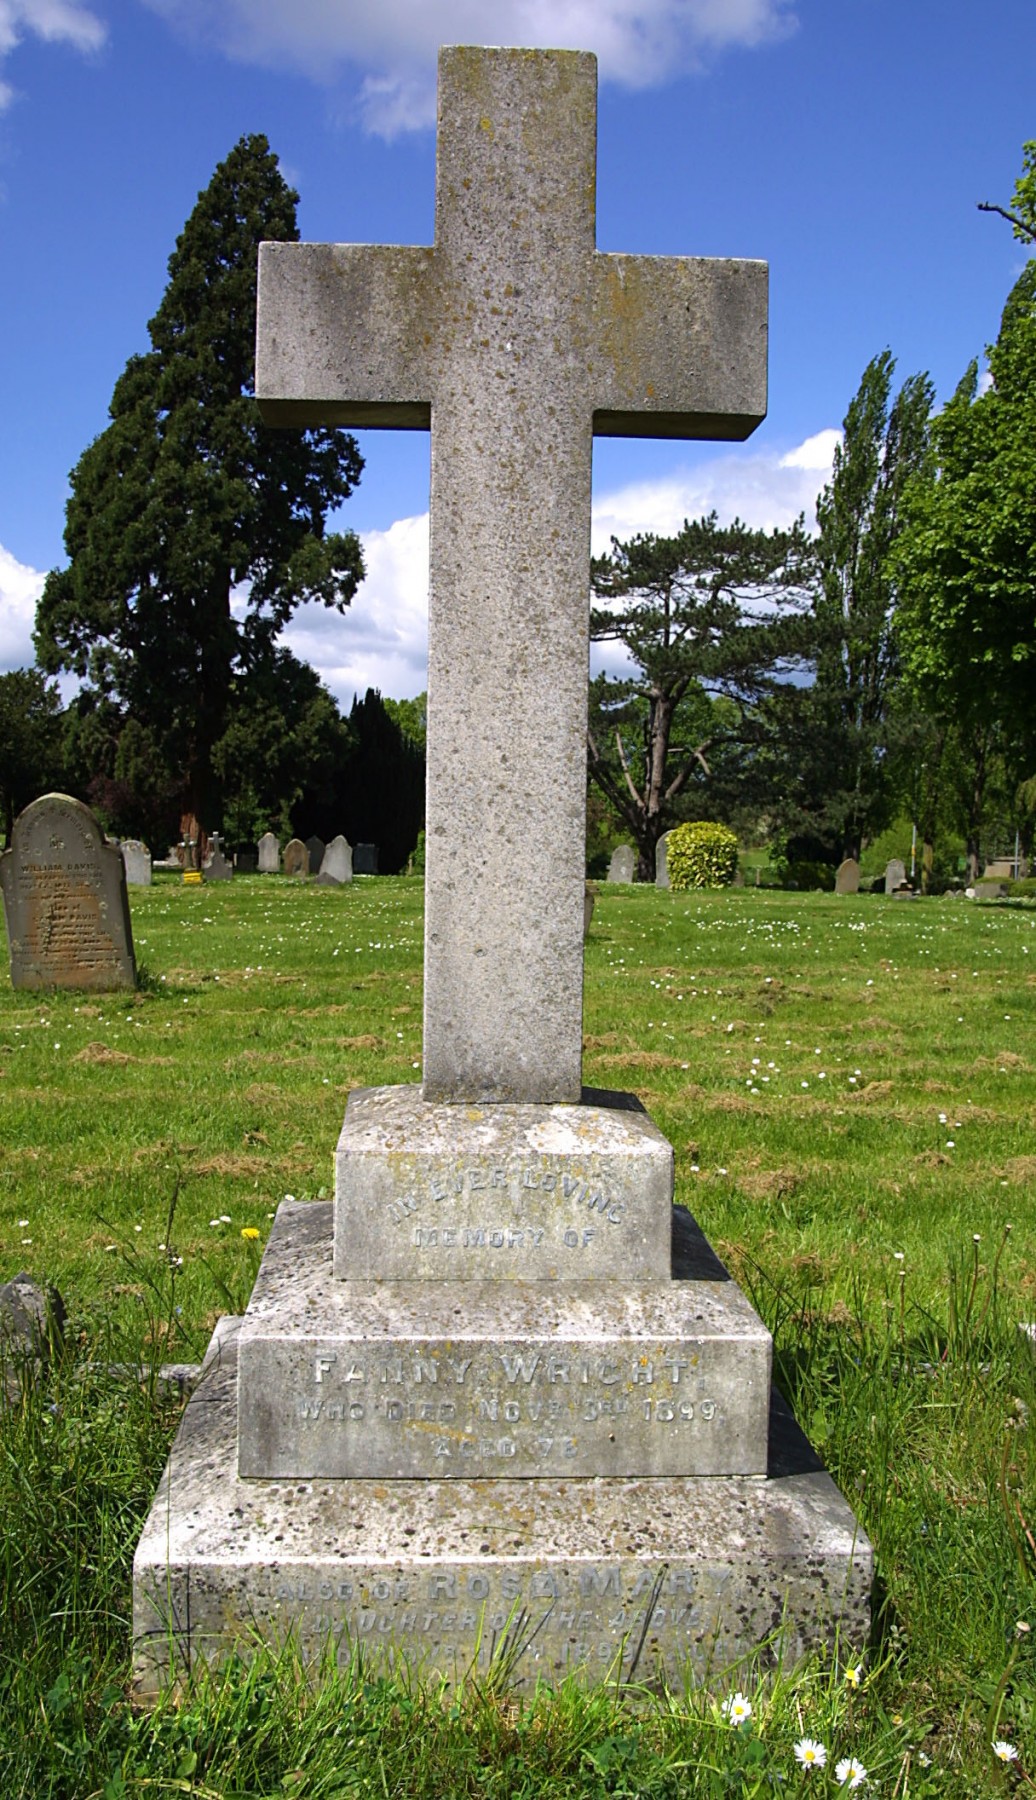 Fanny Wright's grave